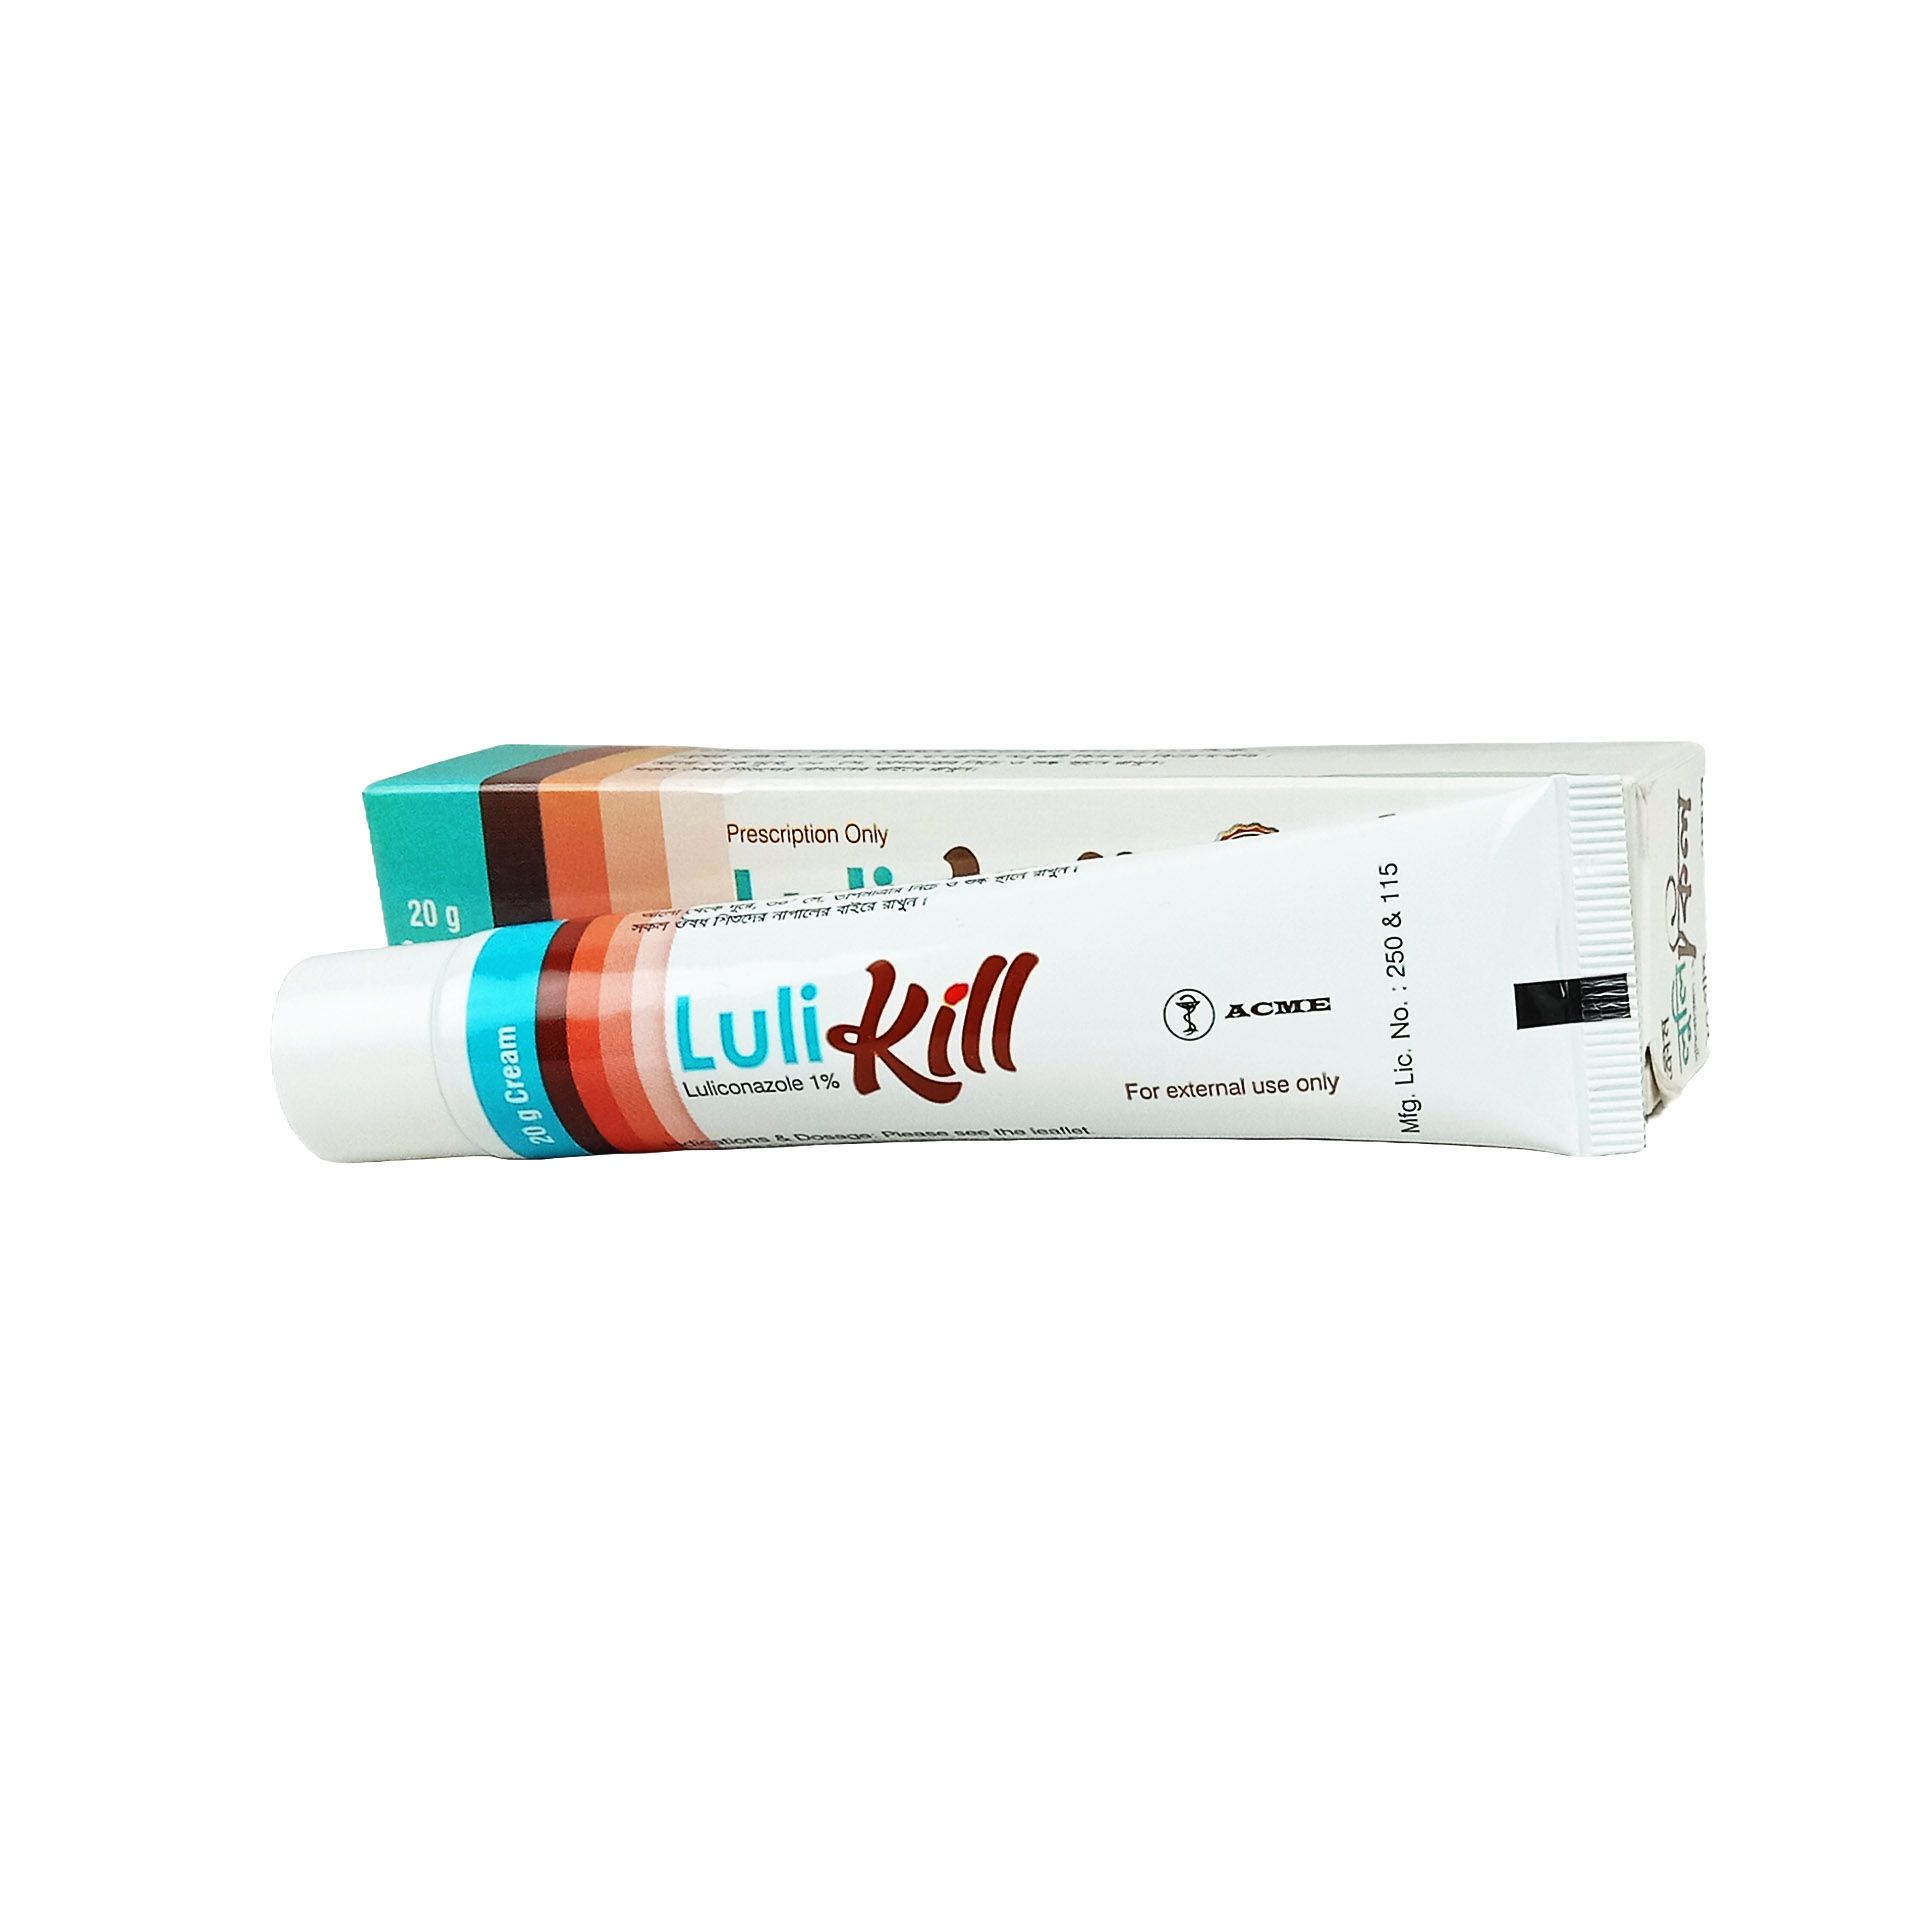 Lulikill 1% Cream